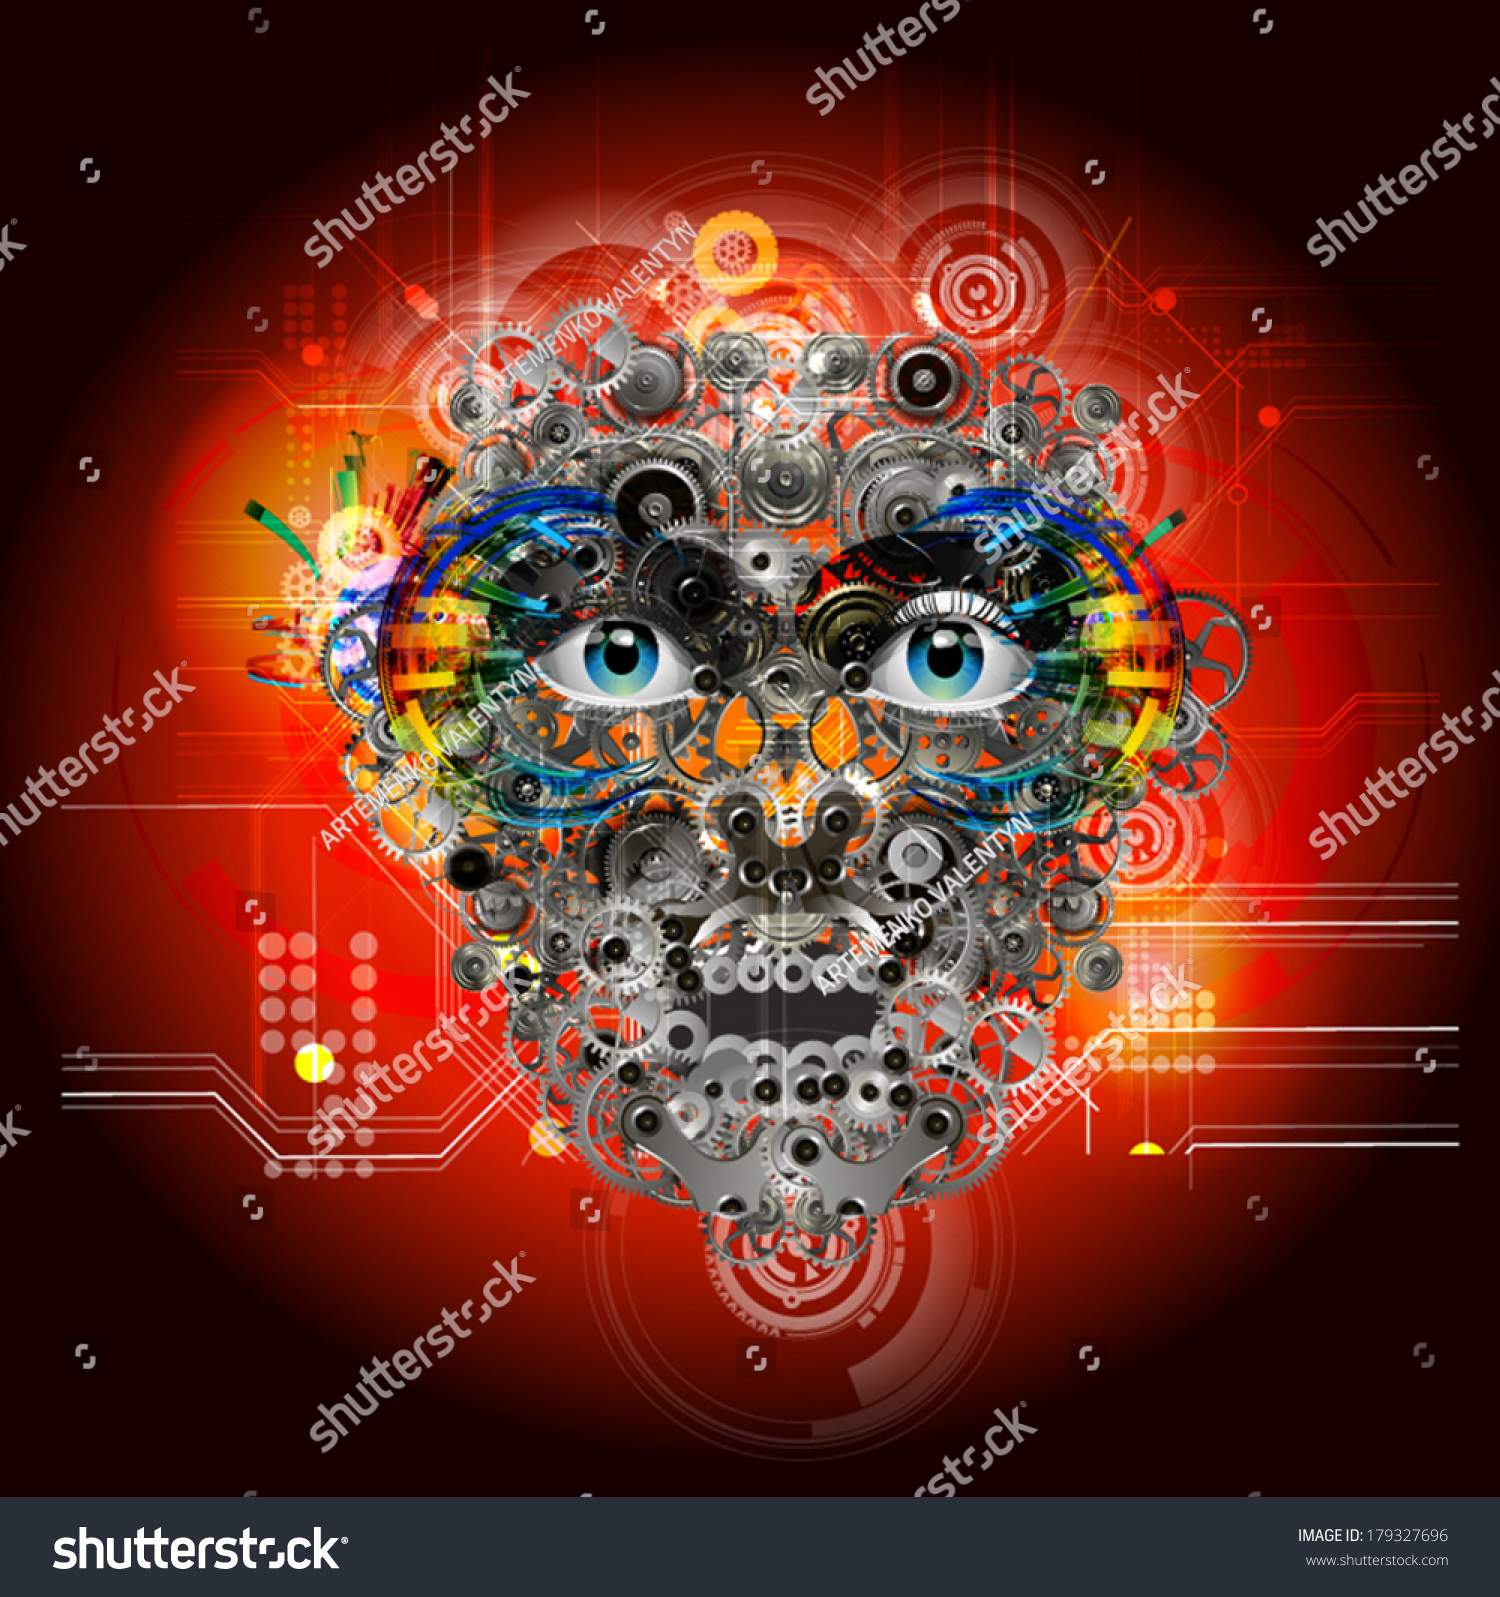 Robot Stock Vector Illustration 179327696 : Shutterstock